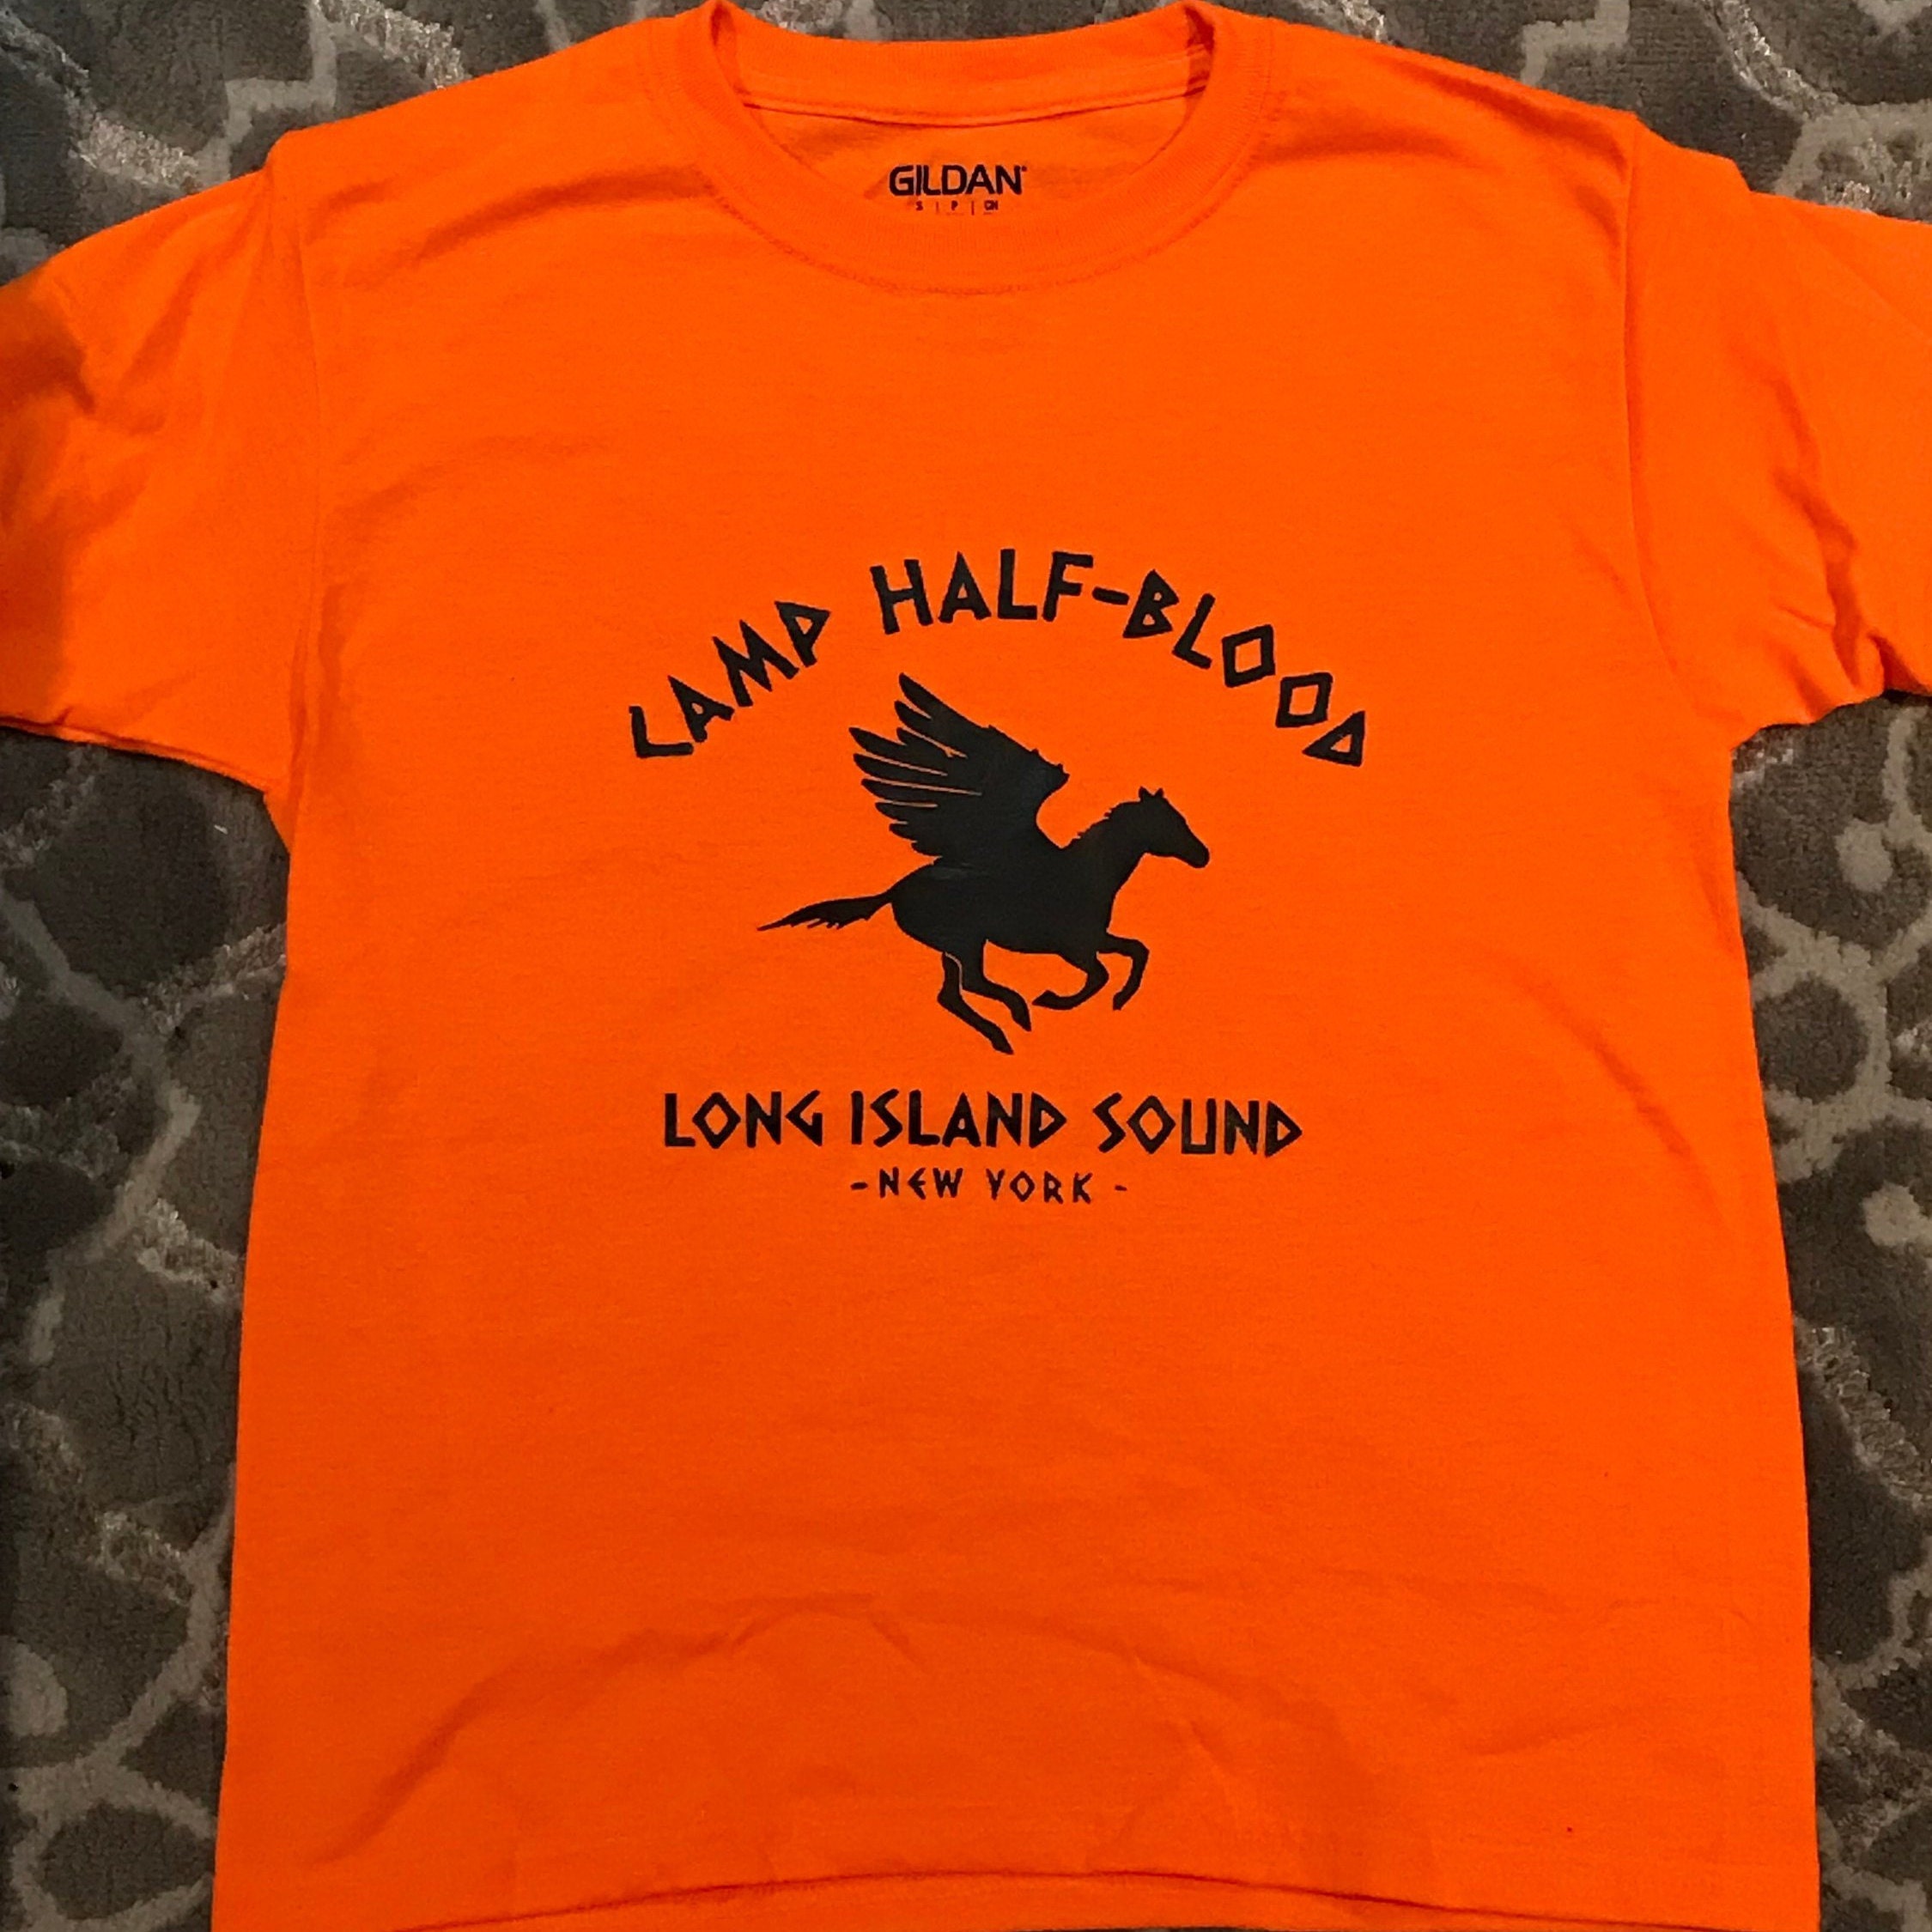 Camp Halfblood Shirt, Camp Half Blood Shirt, Percy Jackson S - Inspire  Uplift